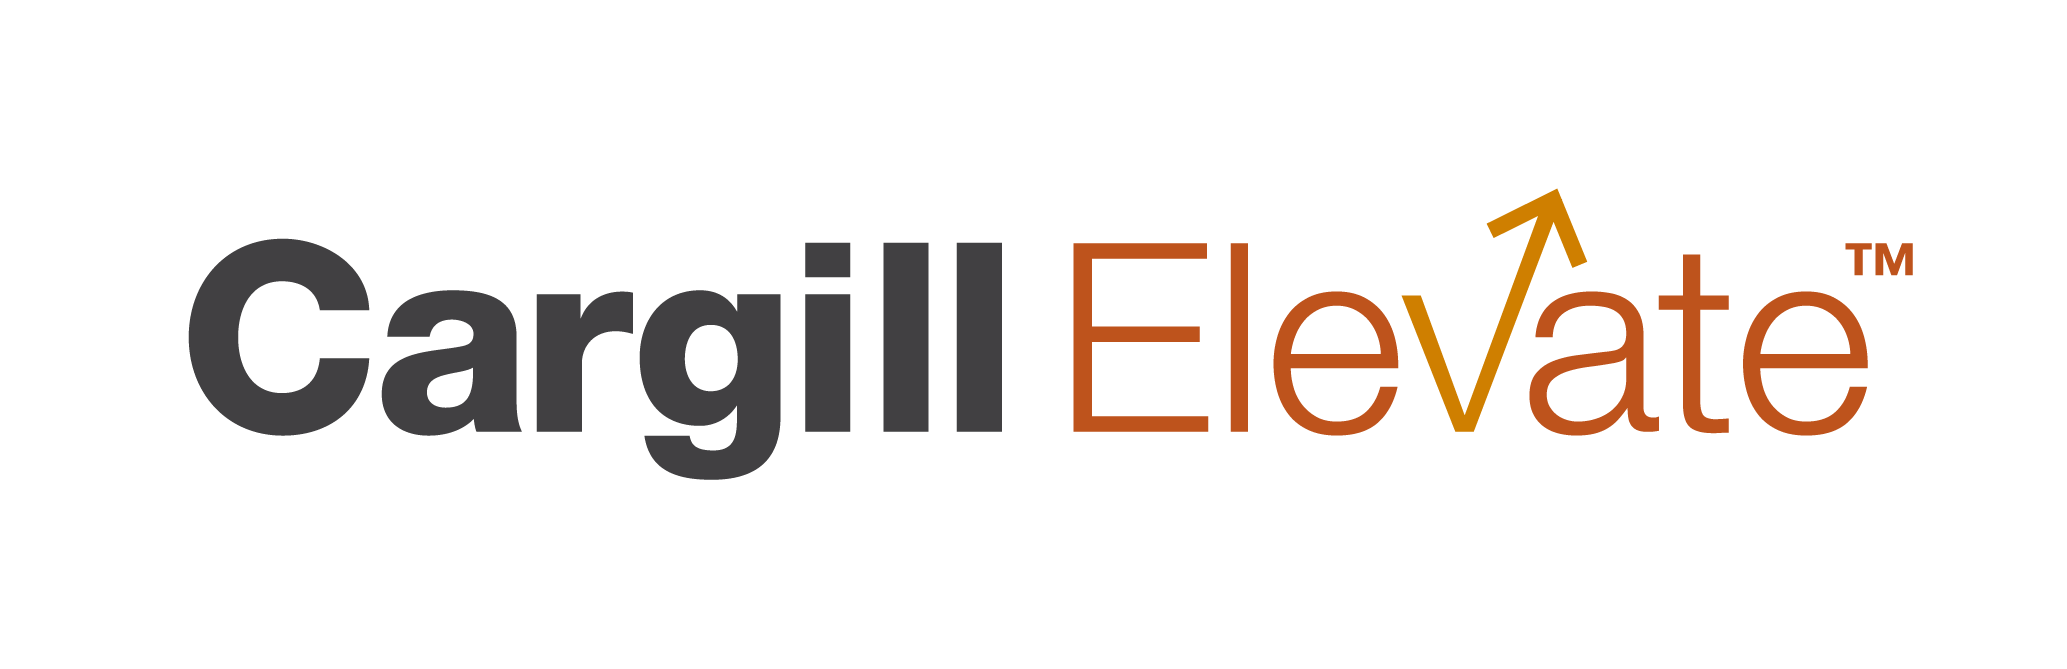 Cargill Elevate Logo